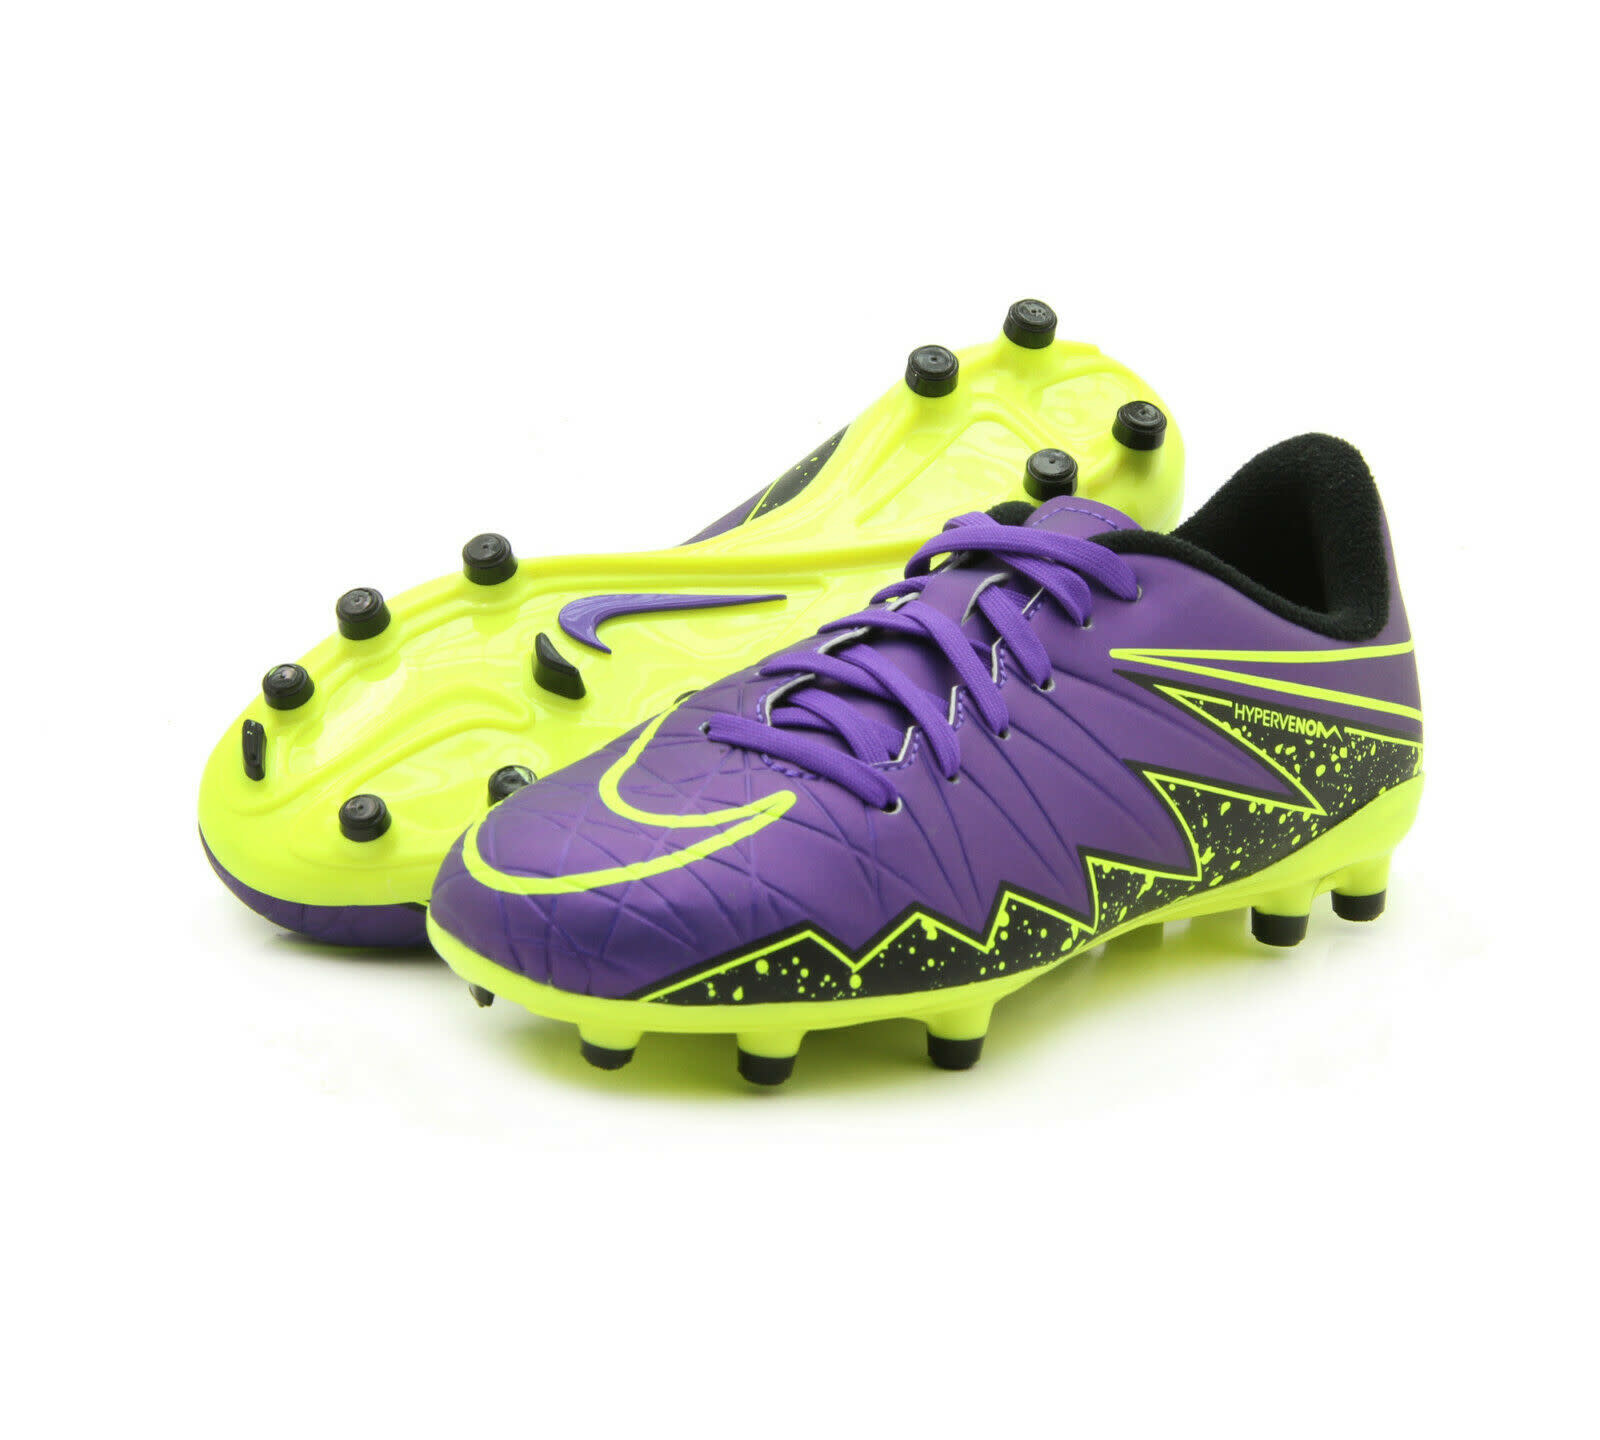 Rusia cuerno Pío Nike Jr Hypervenom Phelon II FG Soccer Shoes - Neon/Purple - Soccerium